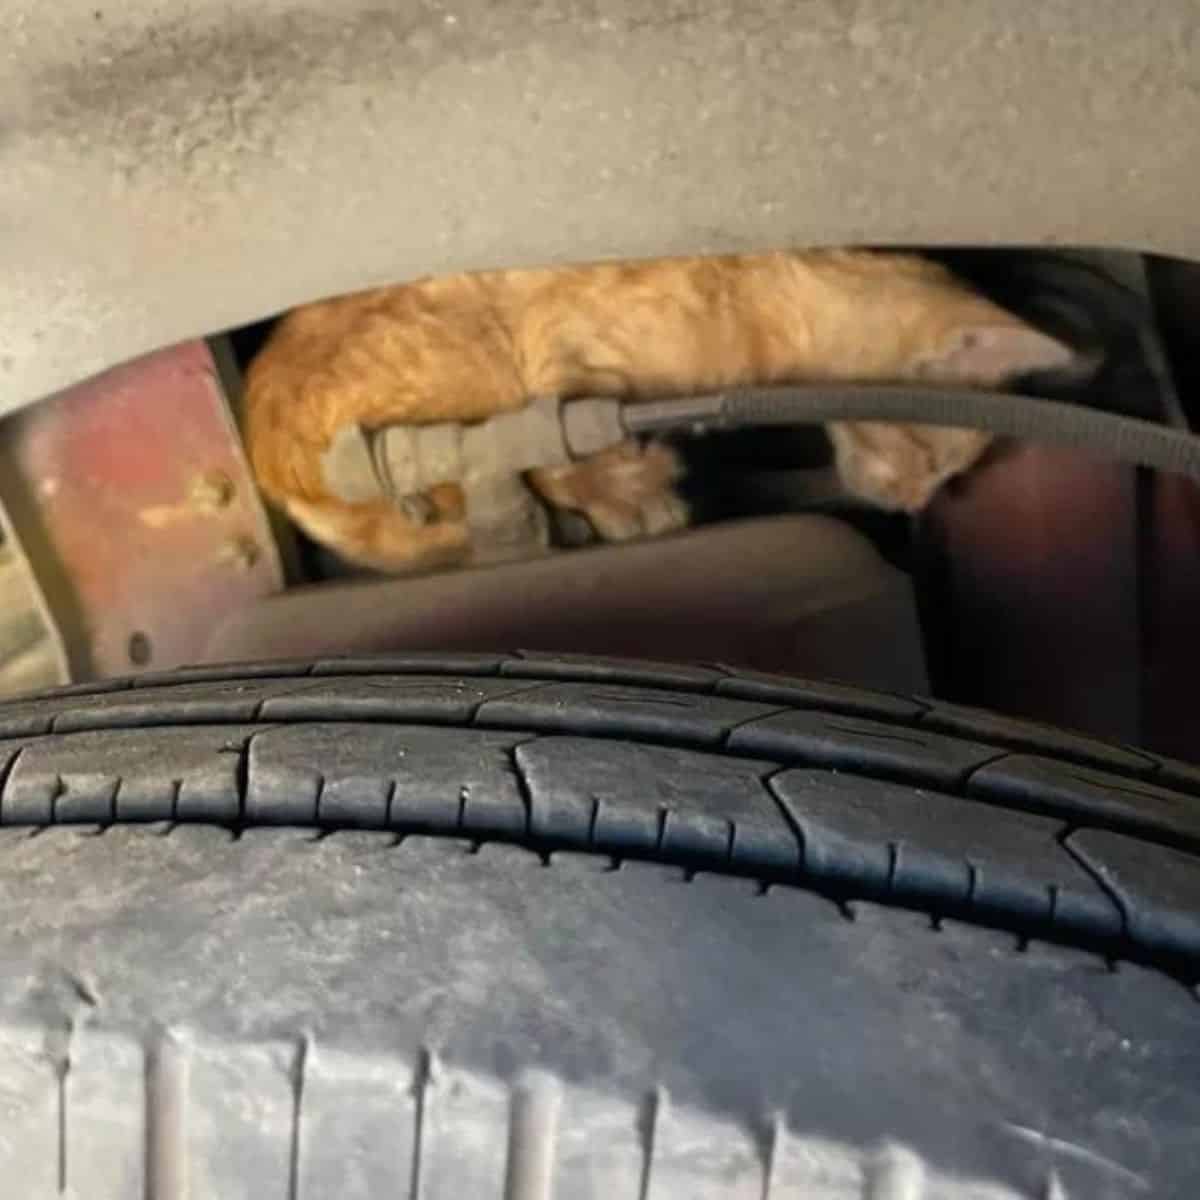 kitten stuck in a bus engine